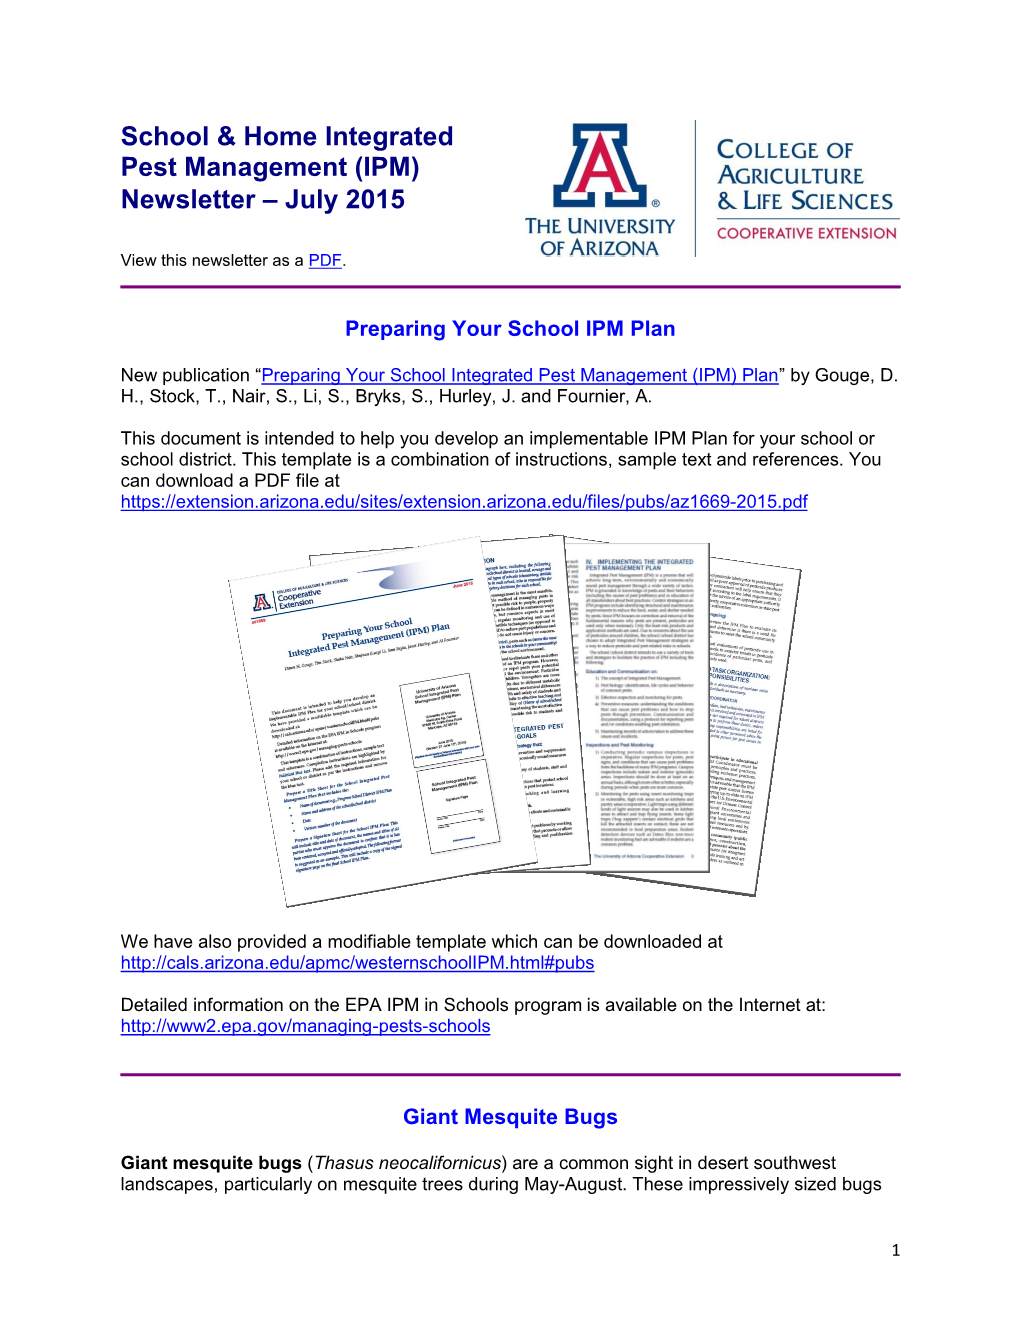 School IPM Newsletter